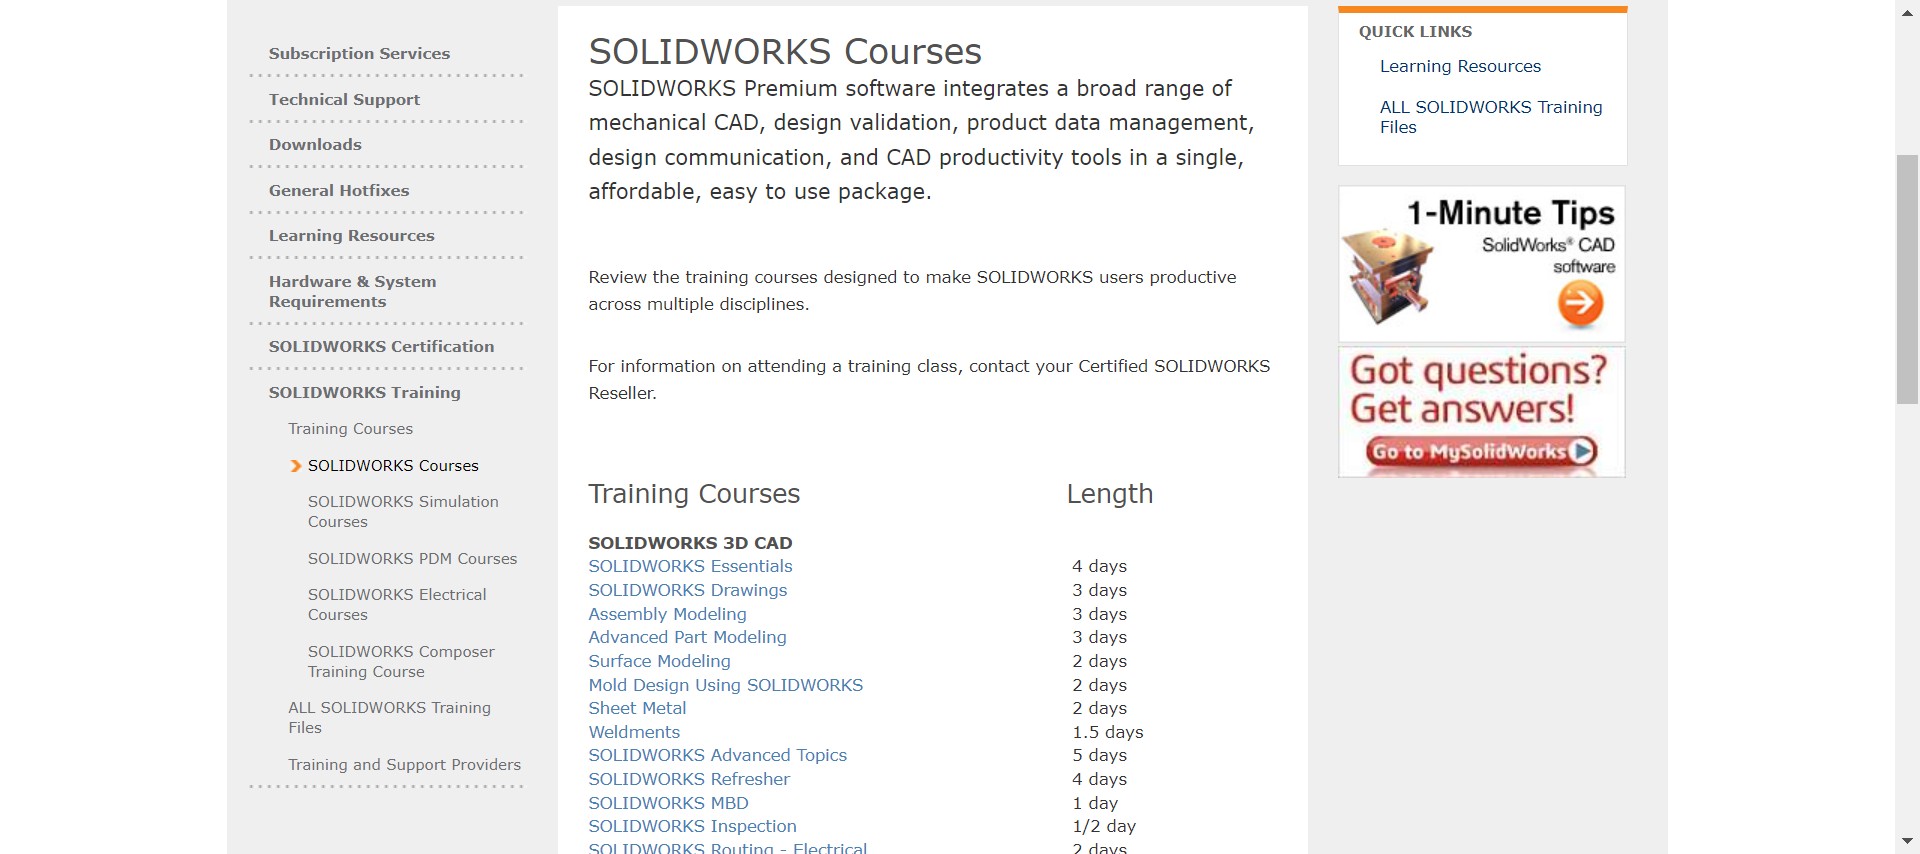 Solidworks Courses